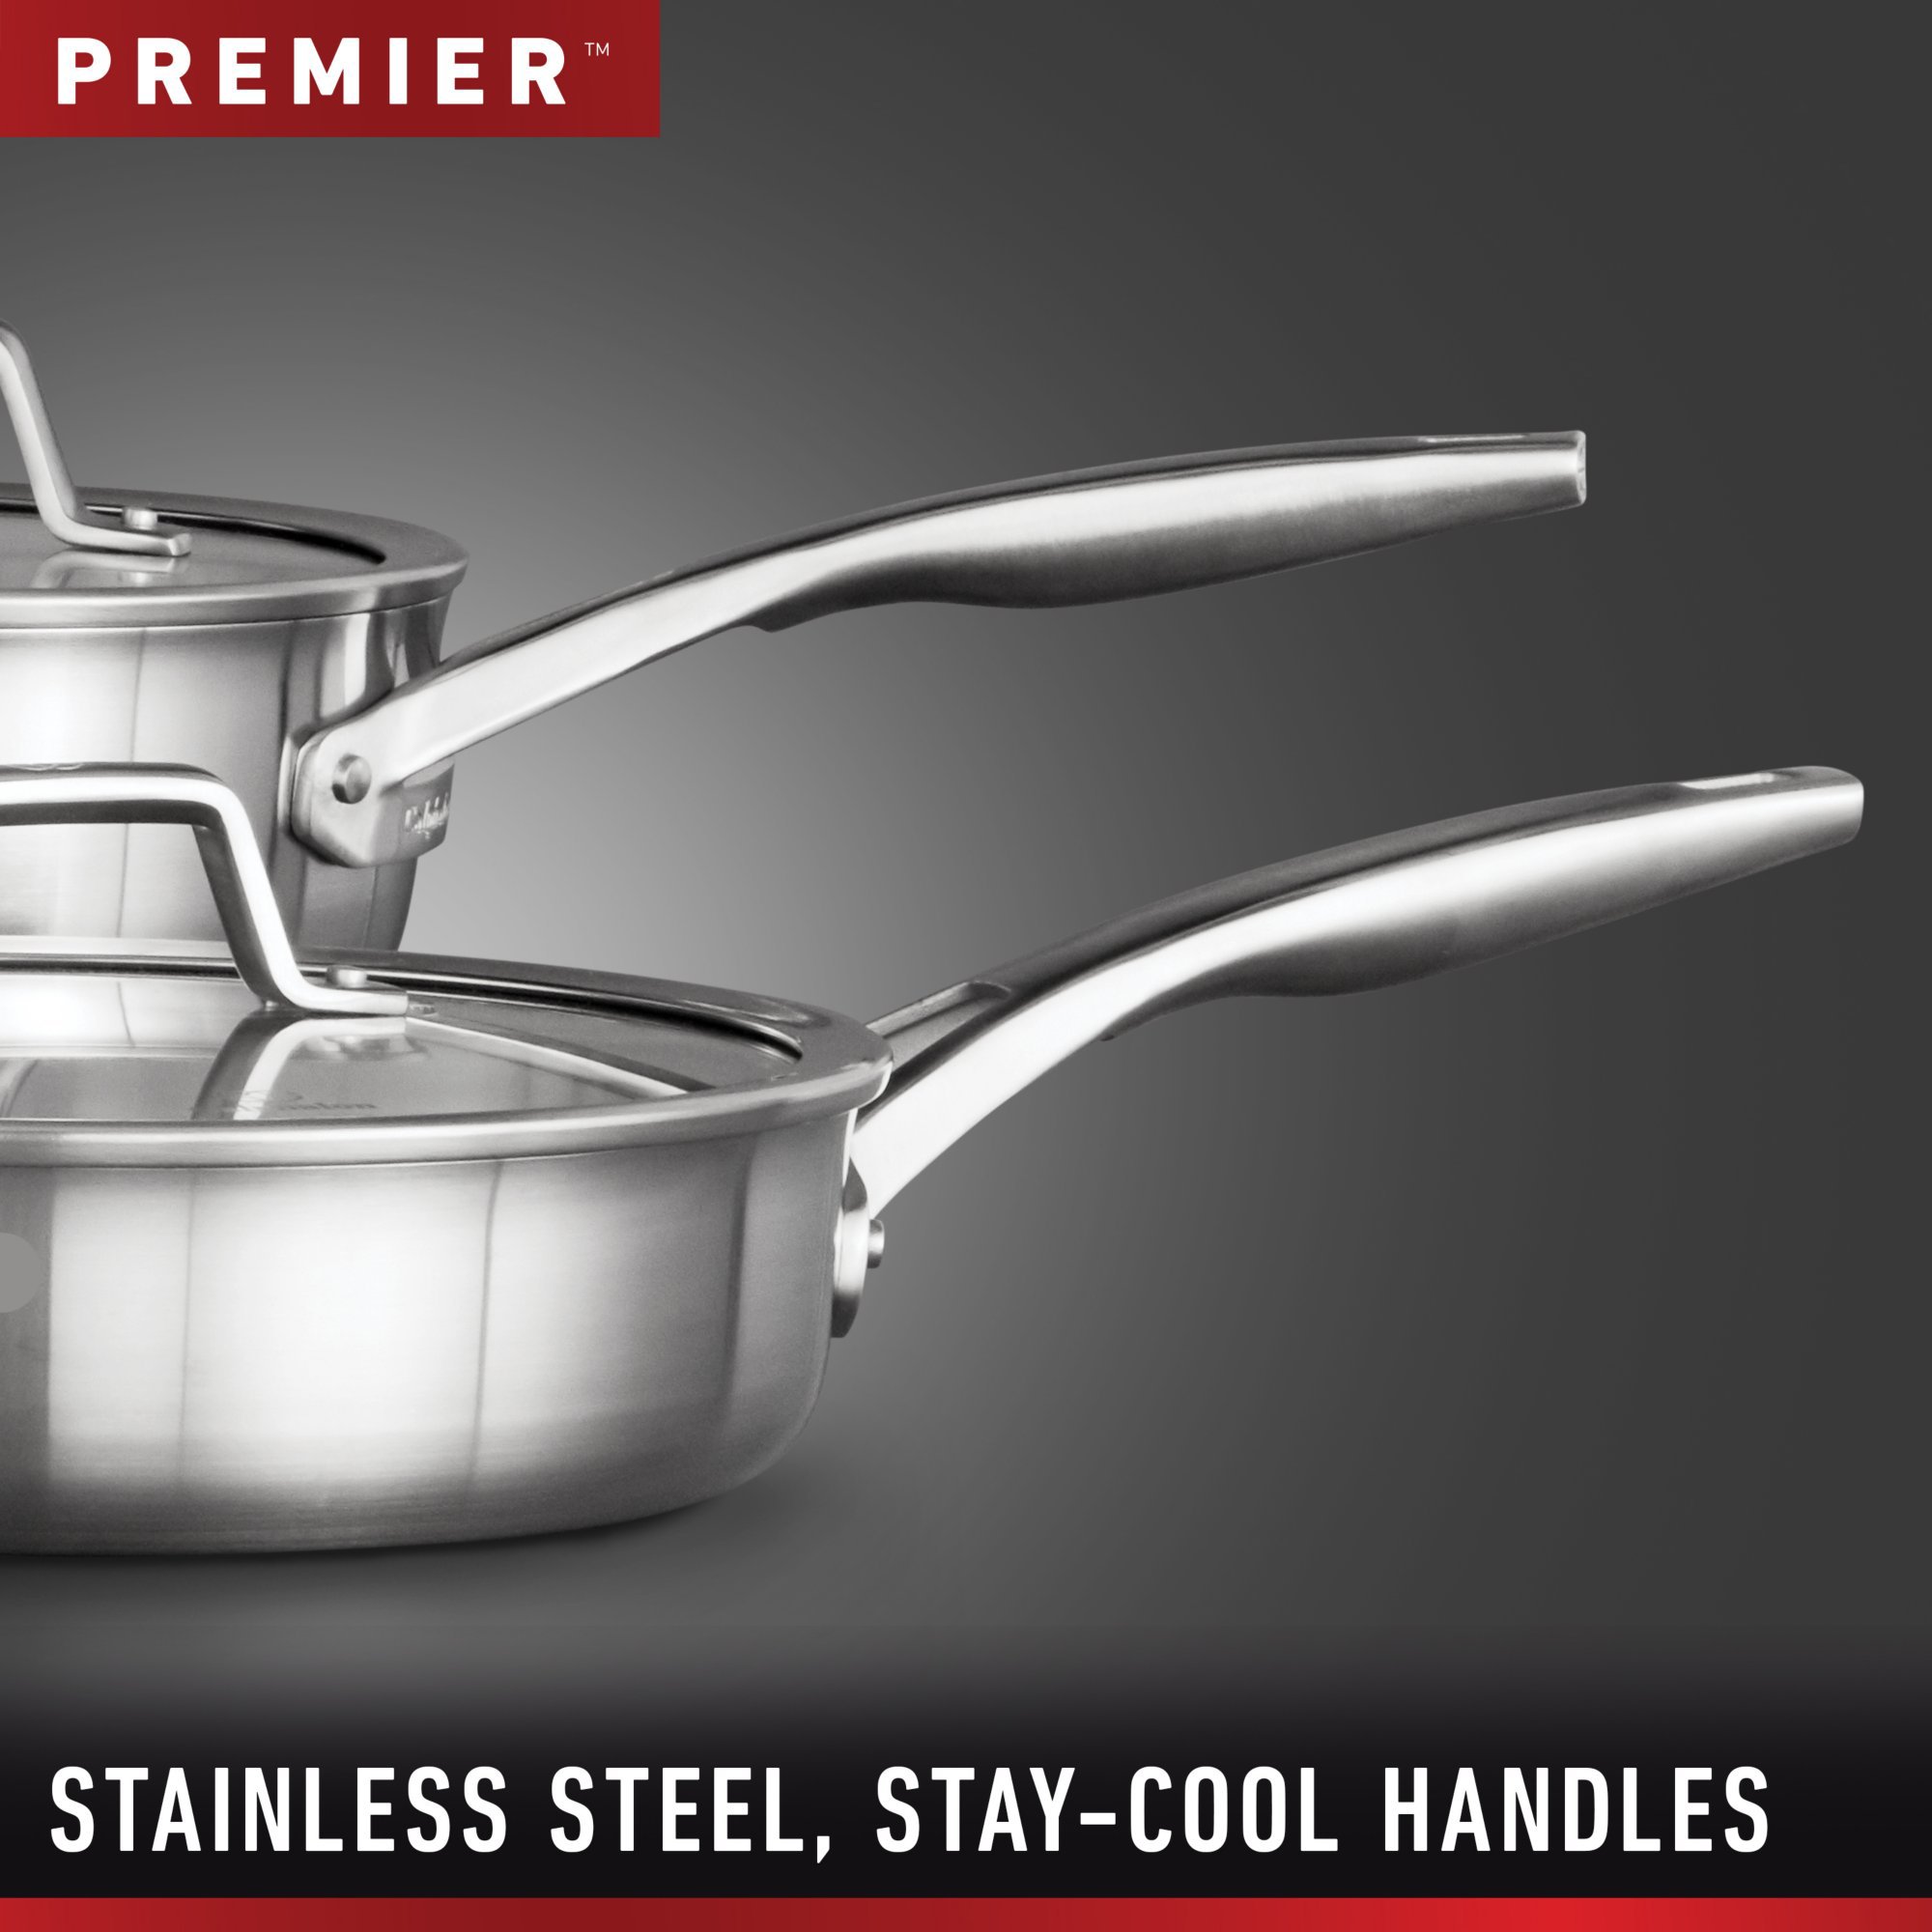 Calphalon Premier 10 Stainless Steel Fry Pan